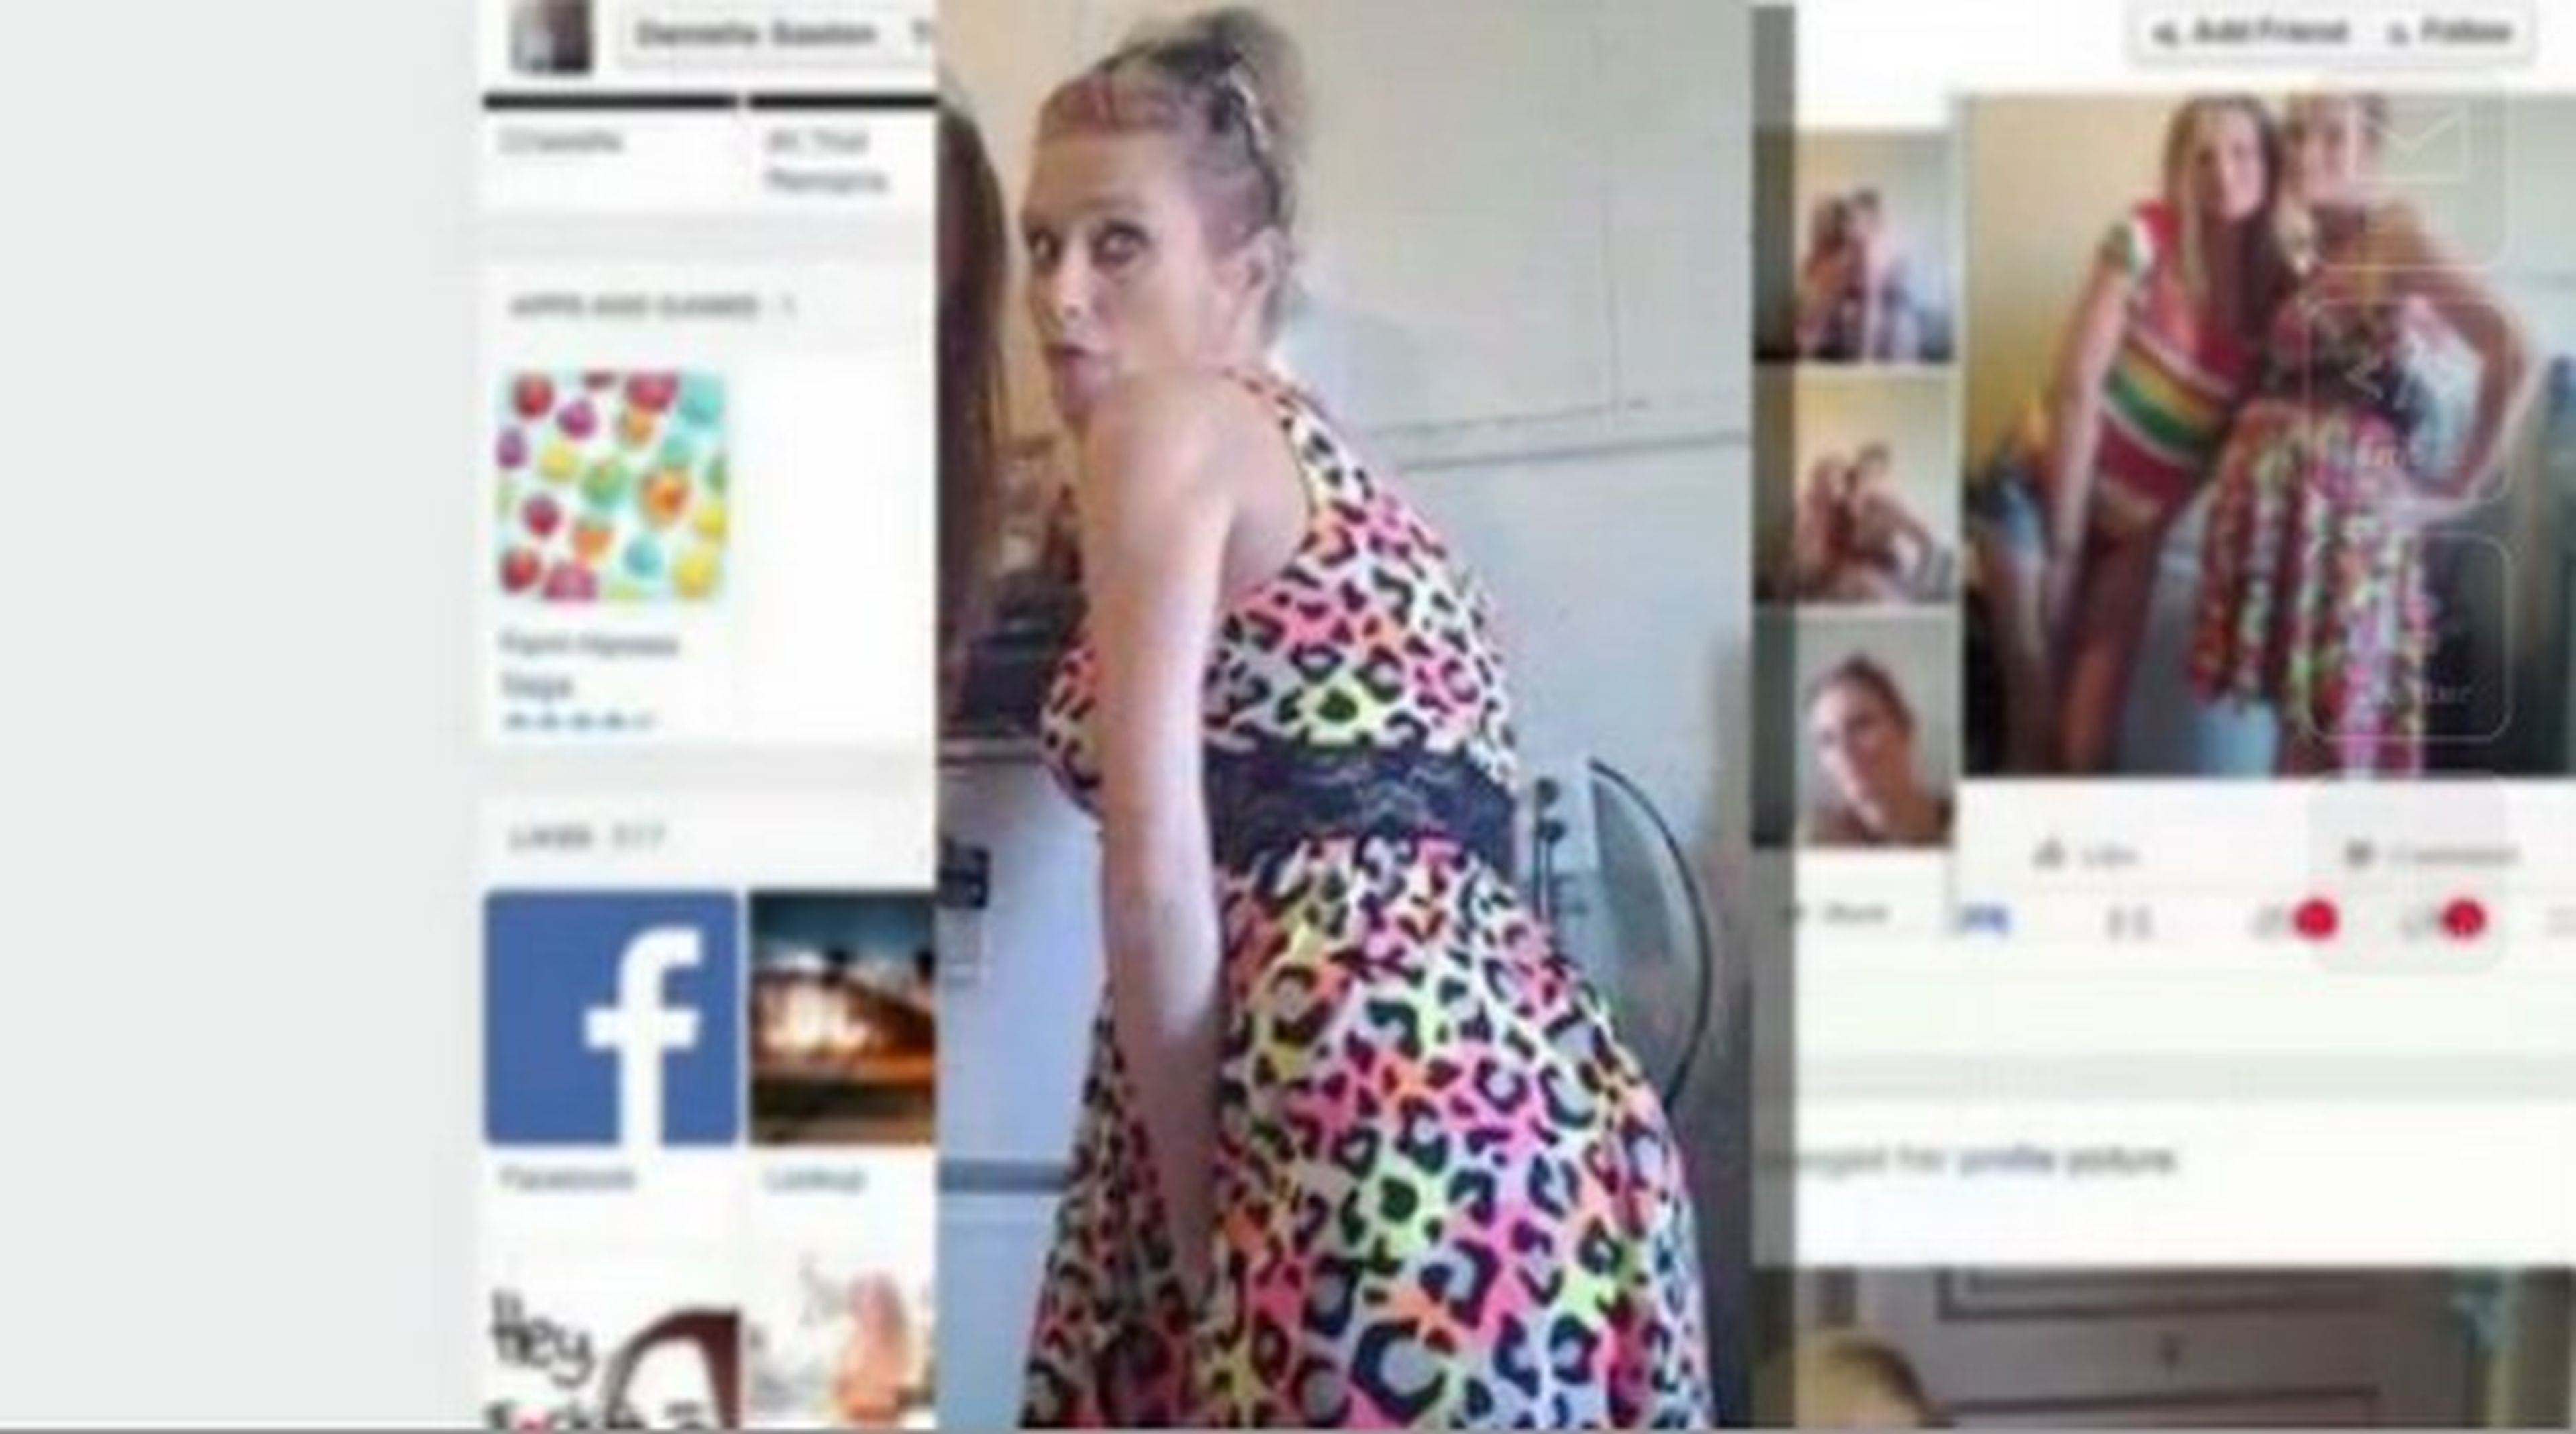 Ladrona pillada por subir selfies a Facebook